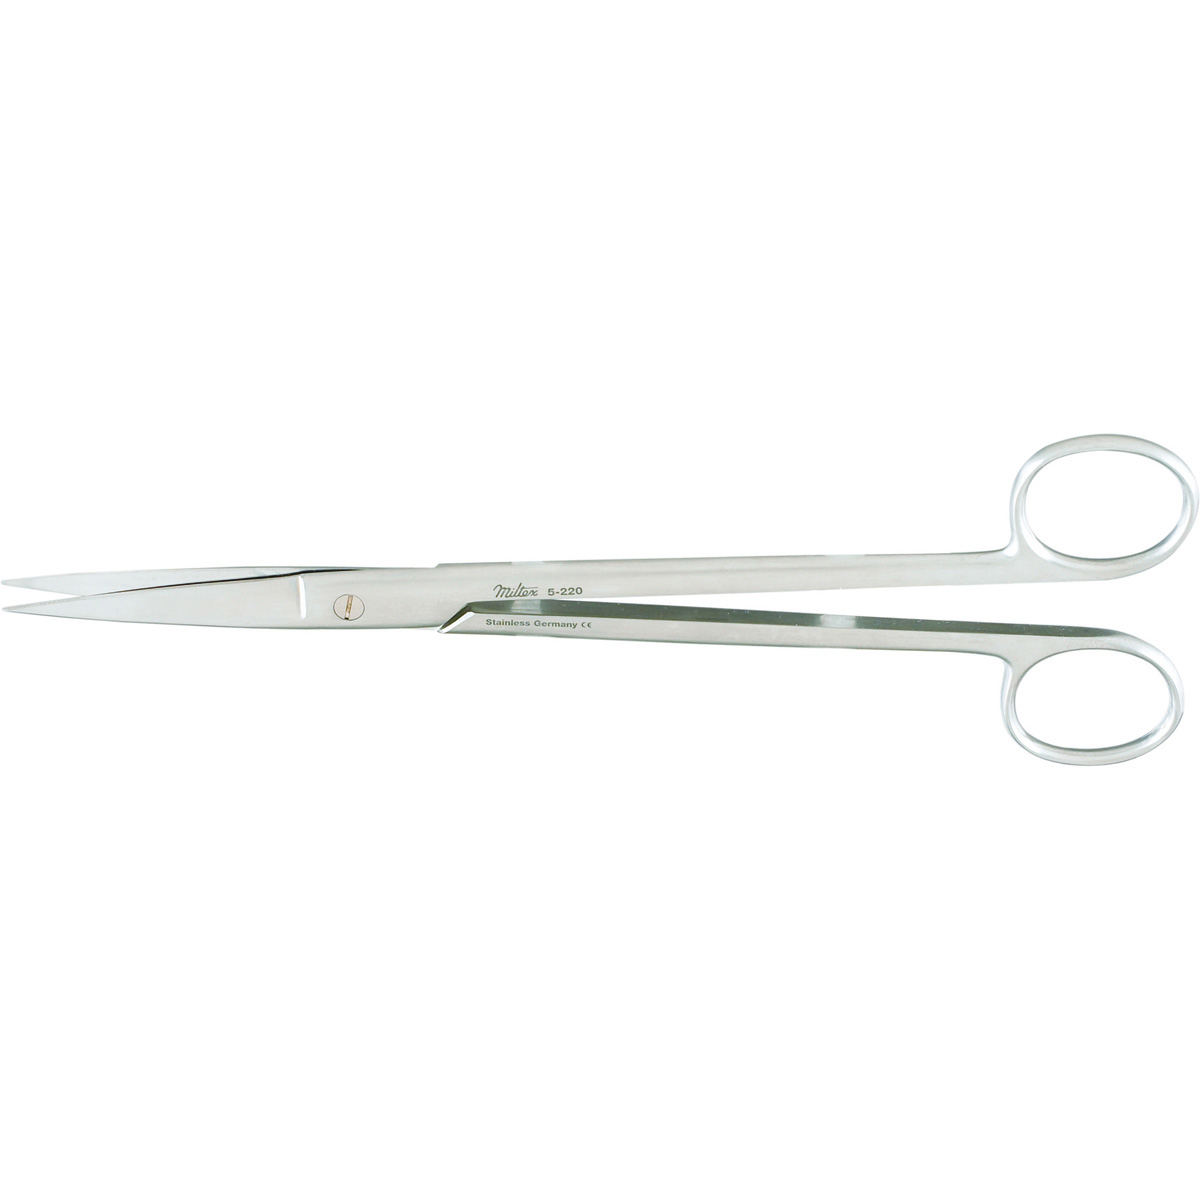 Sims Uterine Scissor 8 Straight Gynecology Surgical